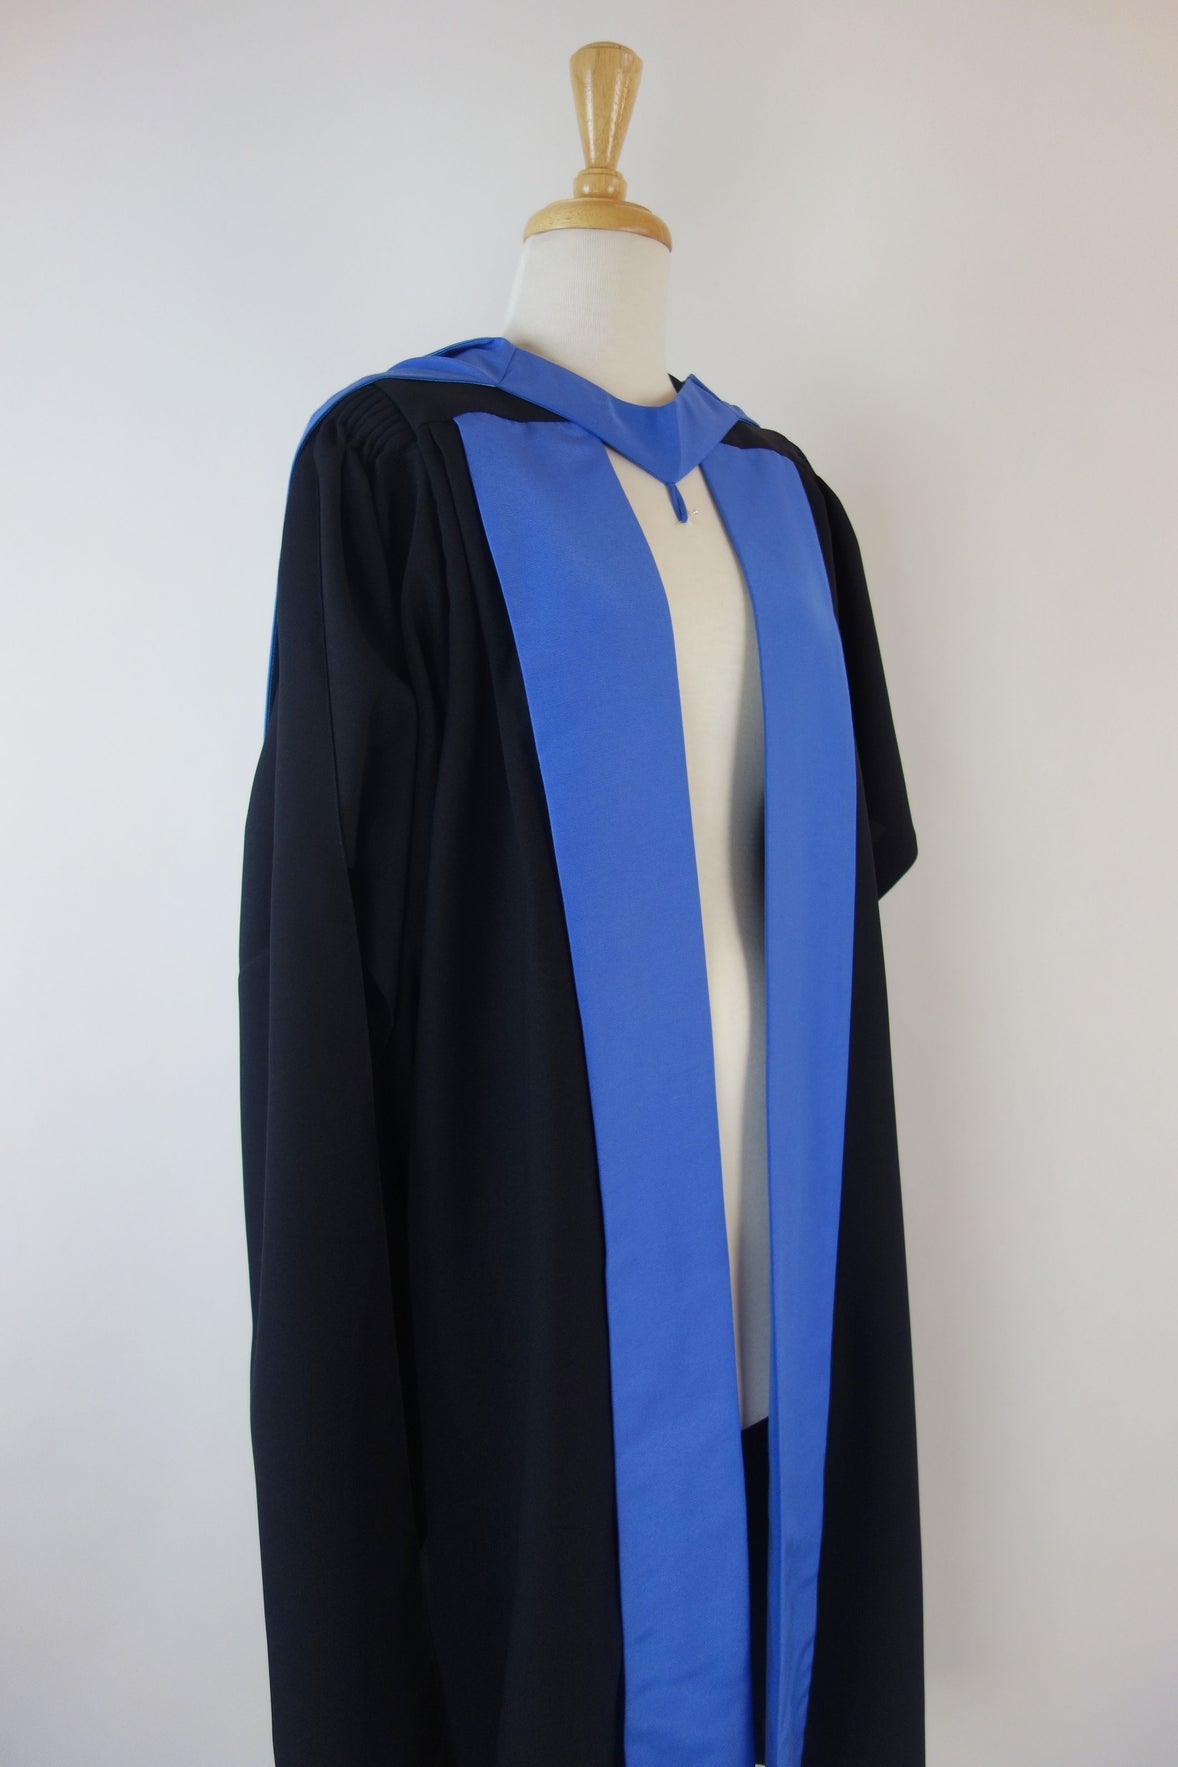 ANU PhD Graduation Gown Set - Gown, Hood and Bonnet